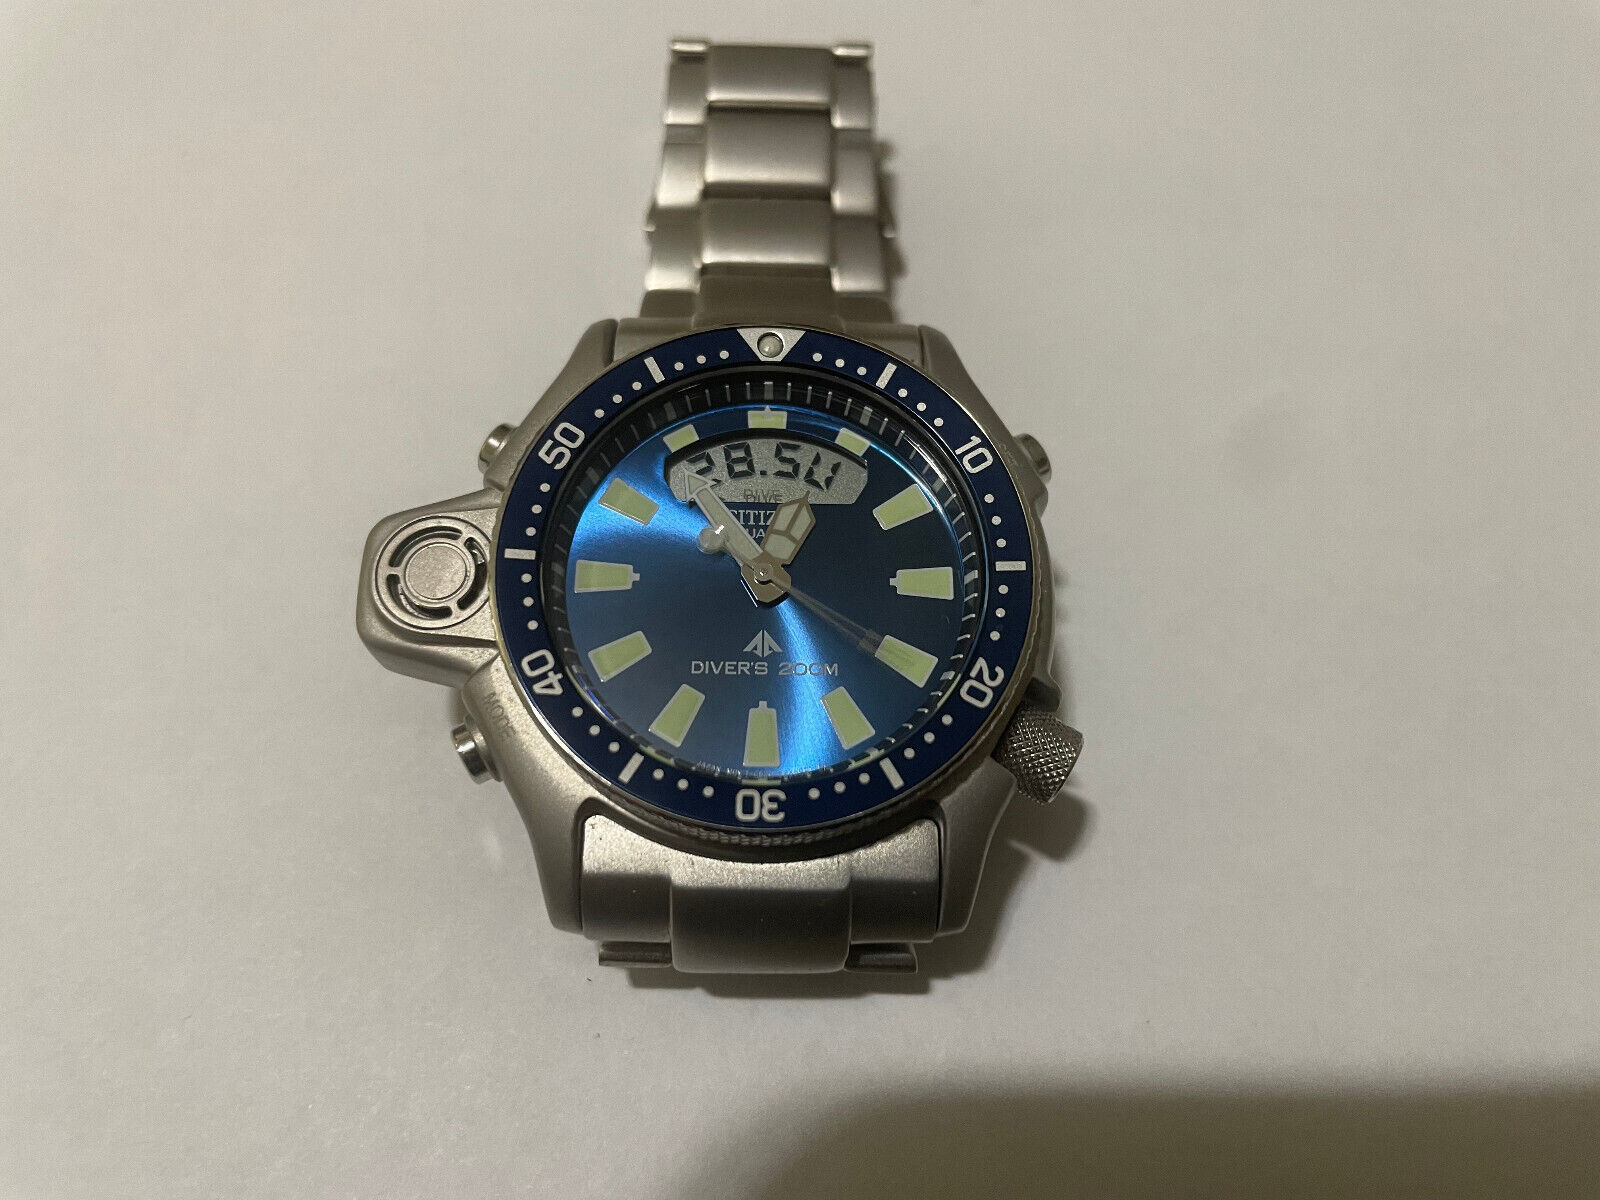 Citizen jp2000-67l promaster aqualand watch